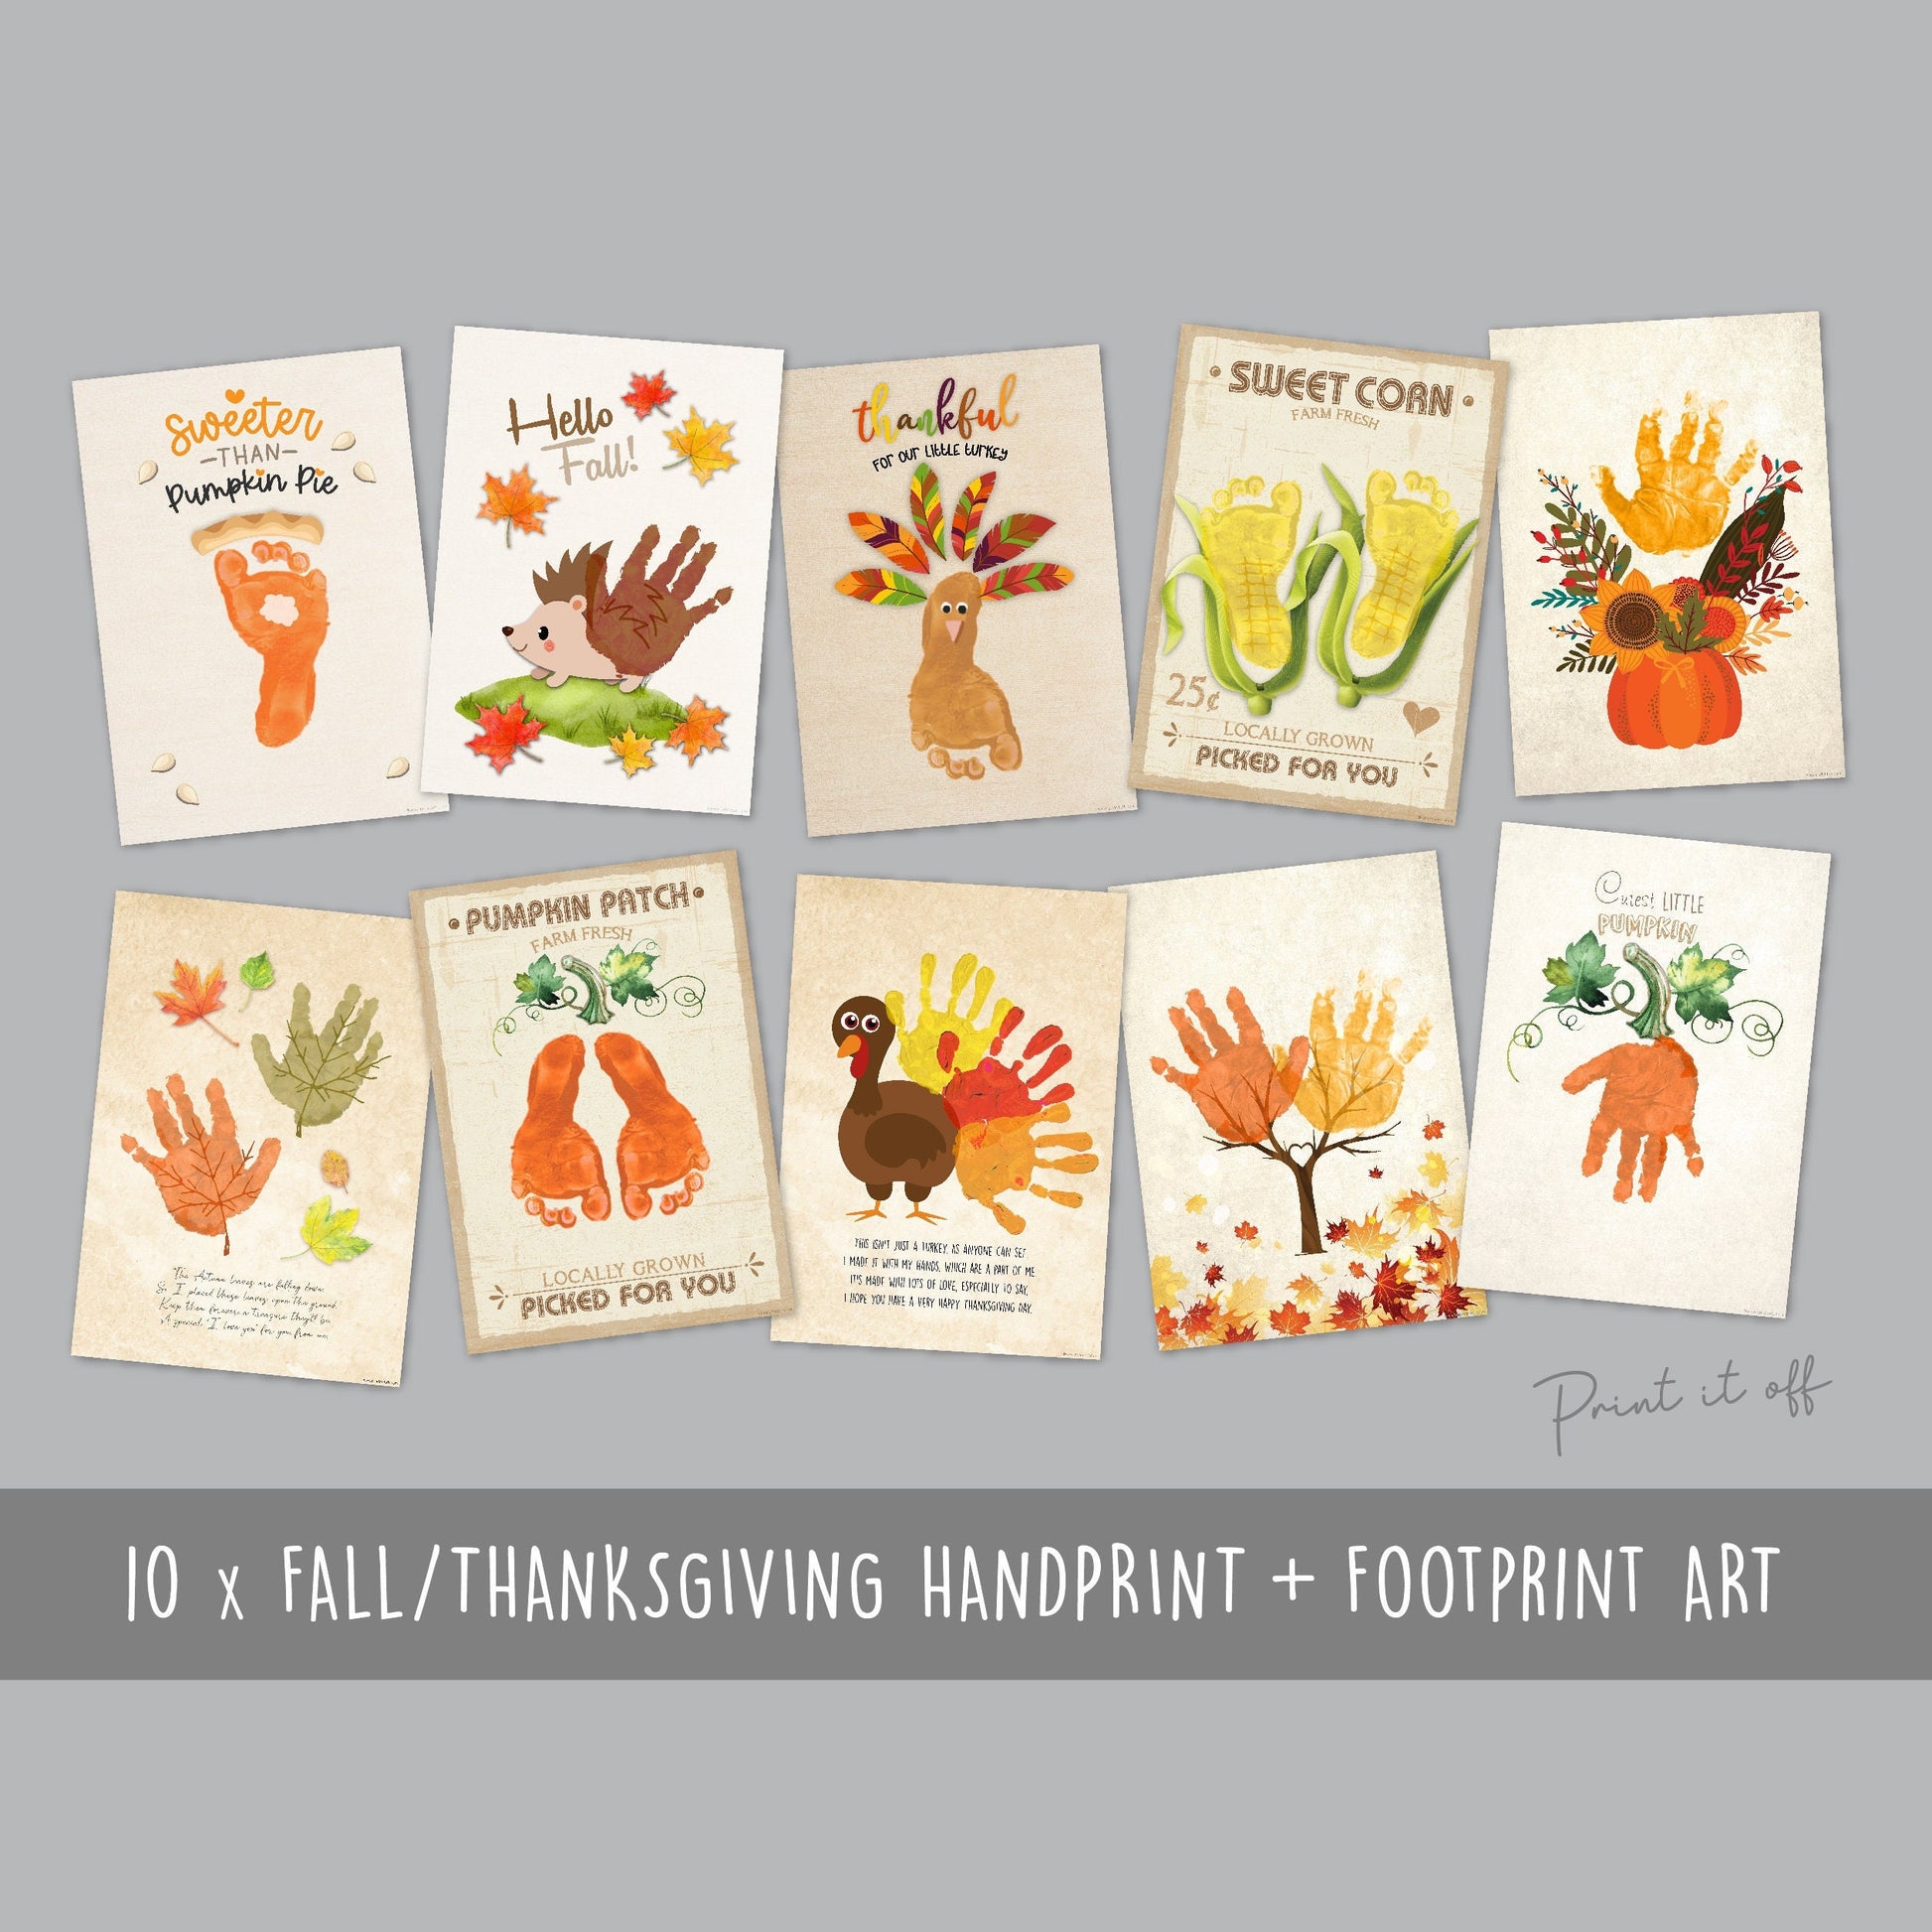 Fall Thanksgiving Pack Handprint Footprint Foot Hand Art Craft / Baby Toddler Kids / Card Gift Activity Memory Keepsake / Print It Off 0636